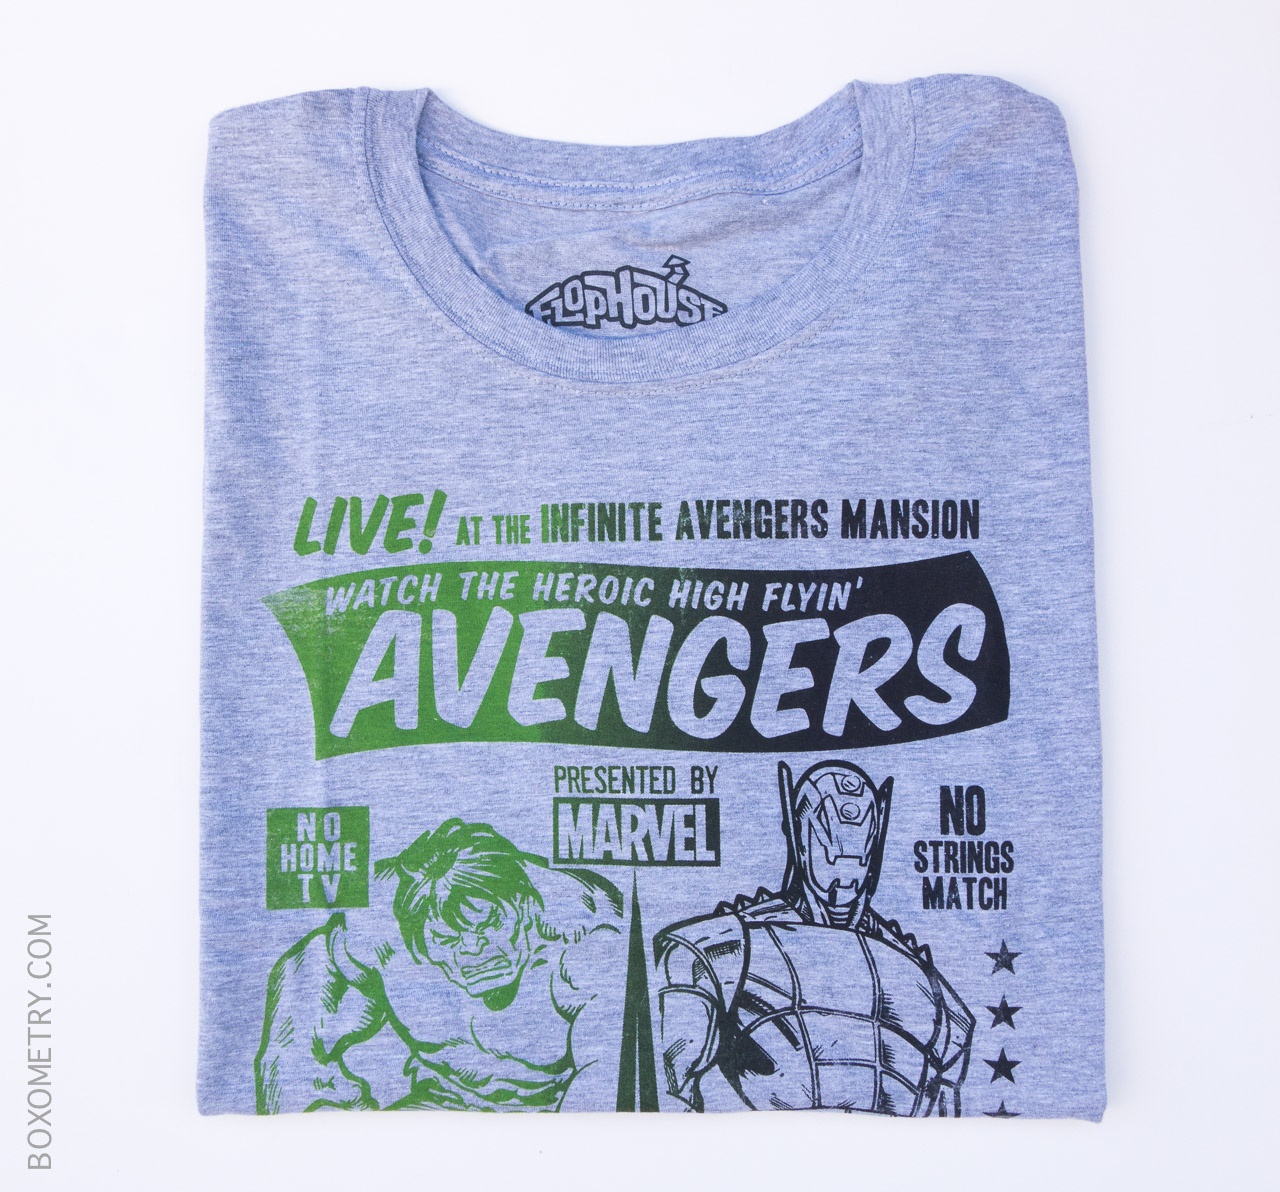 April 2015 Marvel Collector Corps Avengers Hulk vs Ultron T-Shirt